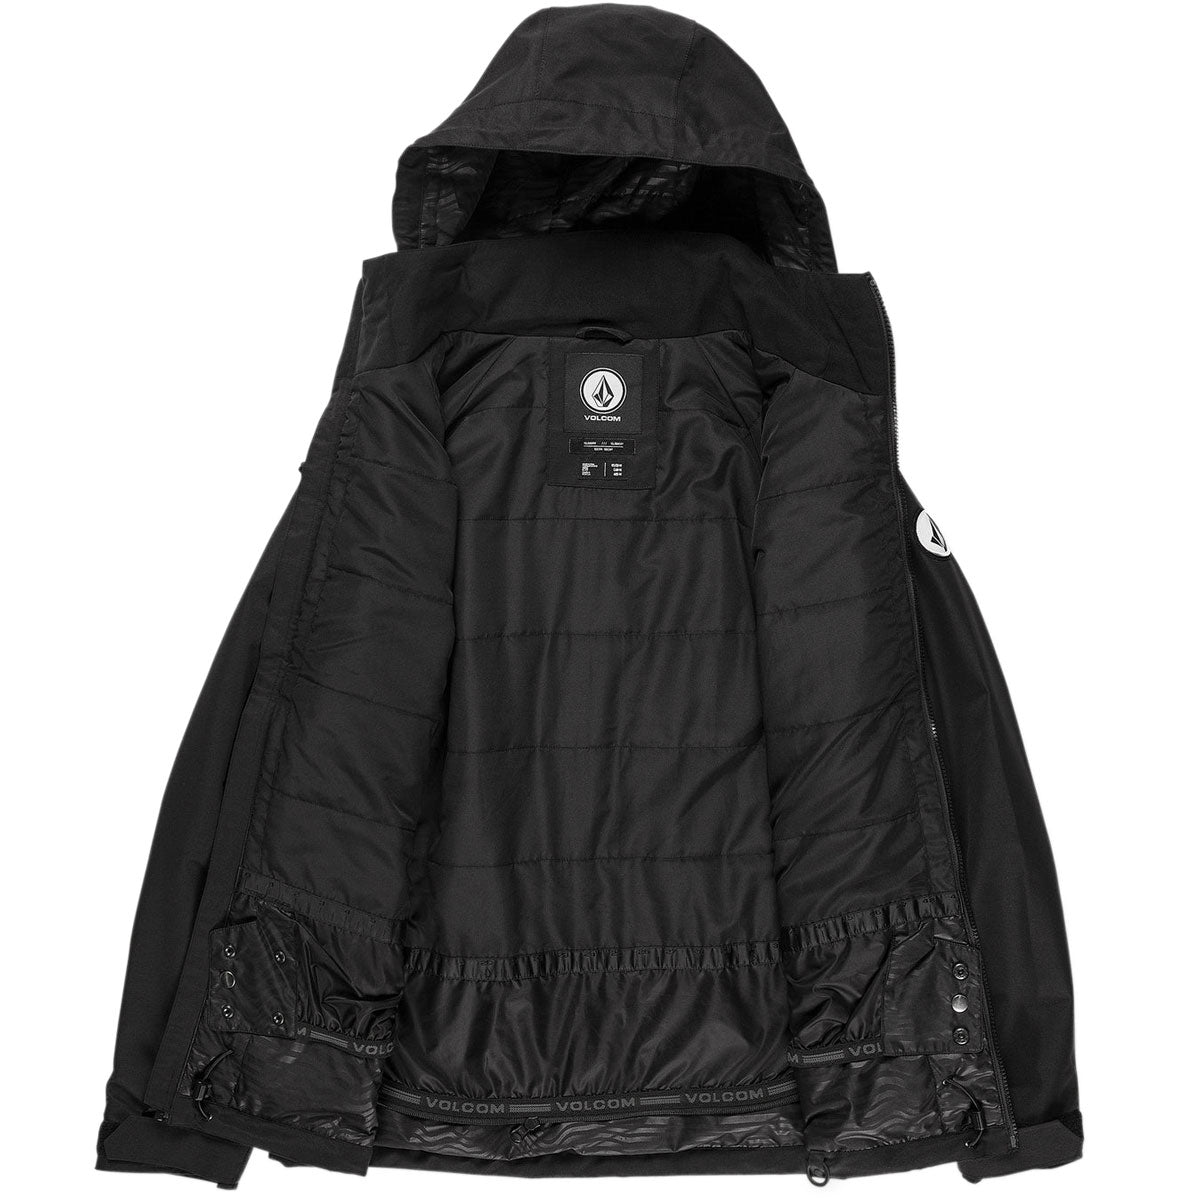 Volcom 2836 Insulated Snowboard Jacket - Black image 4